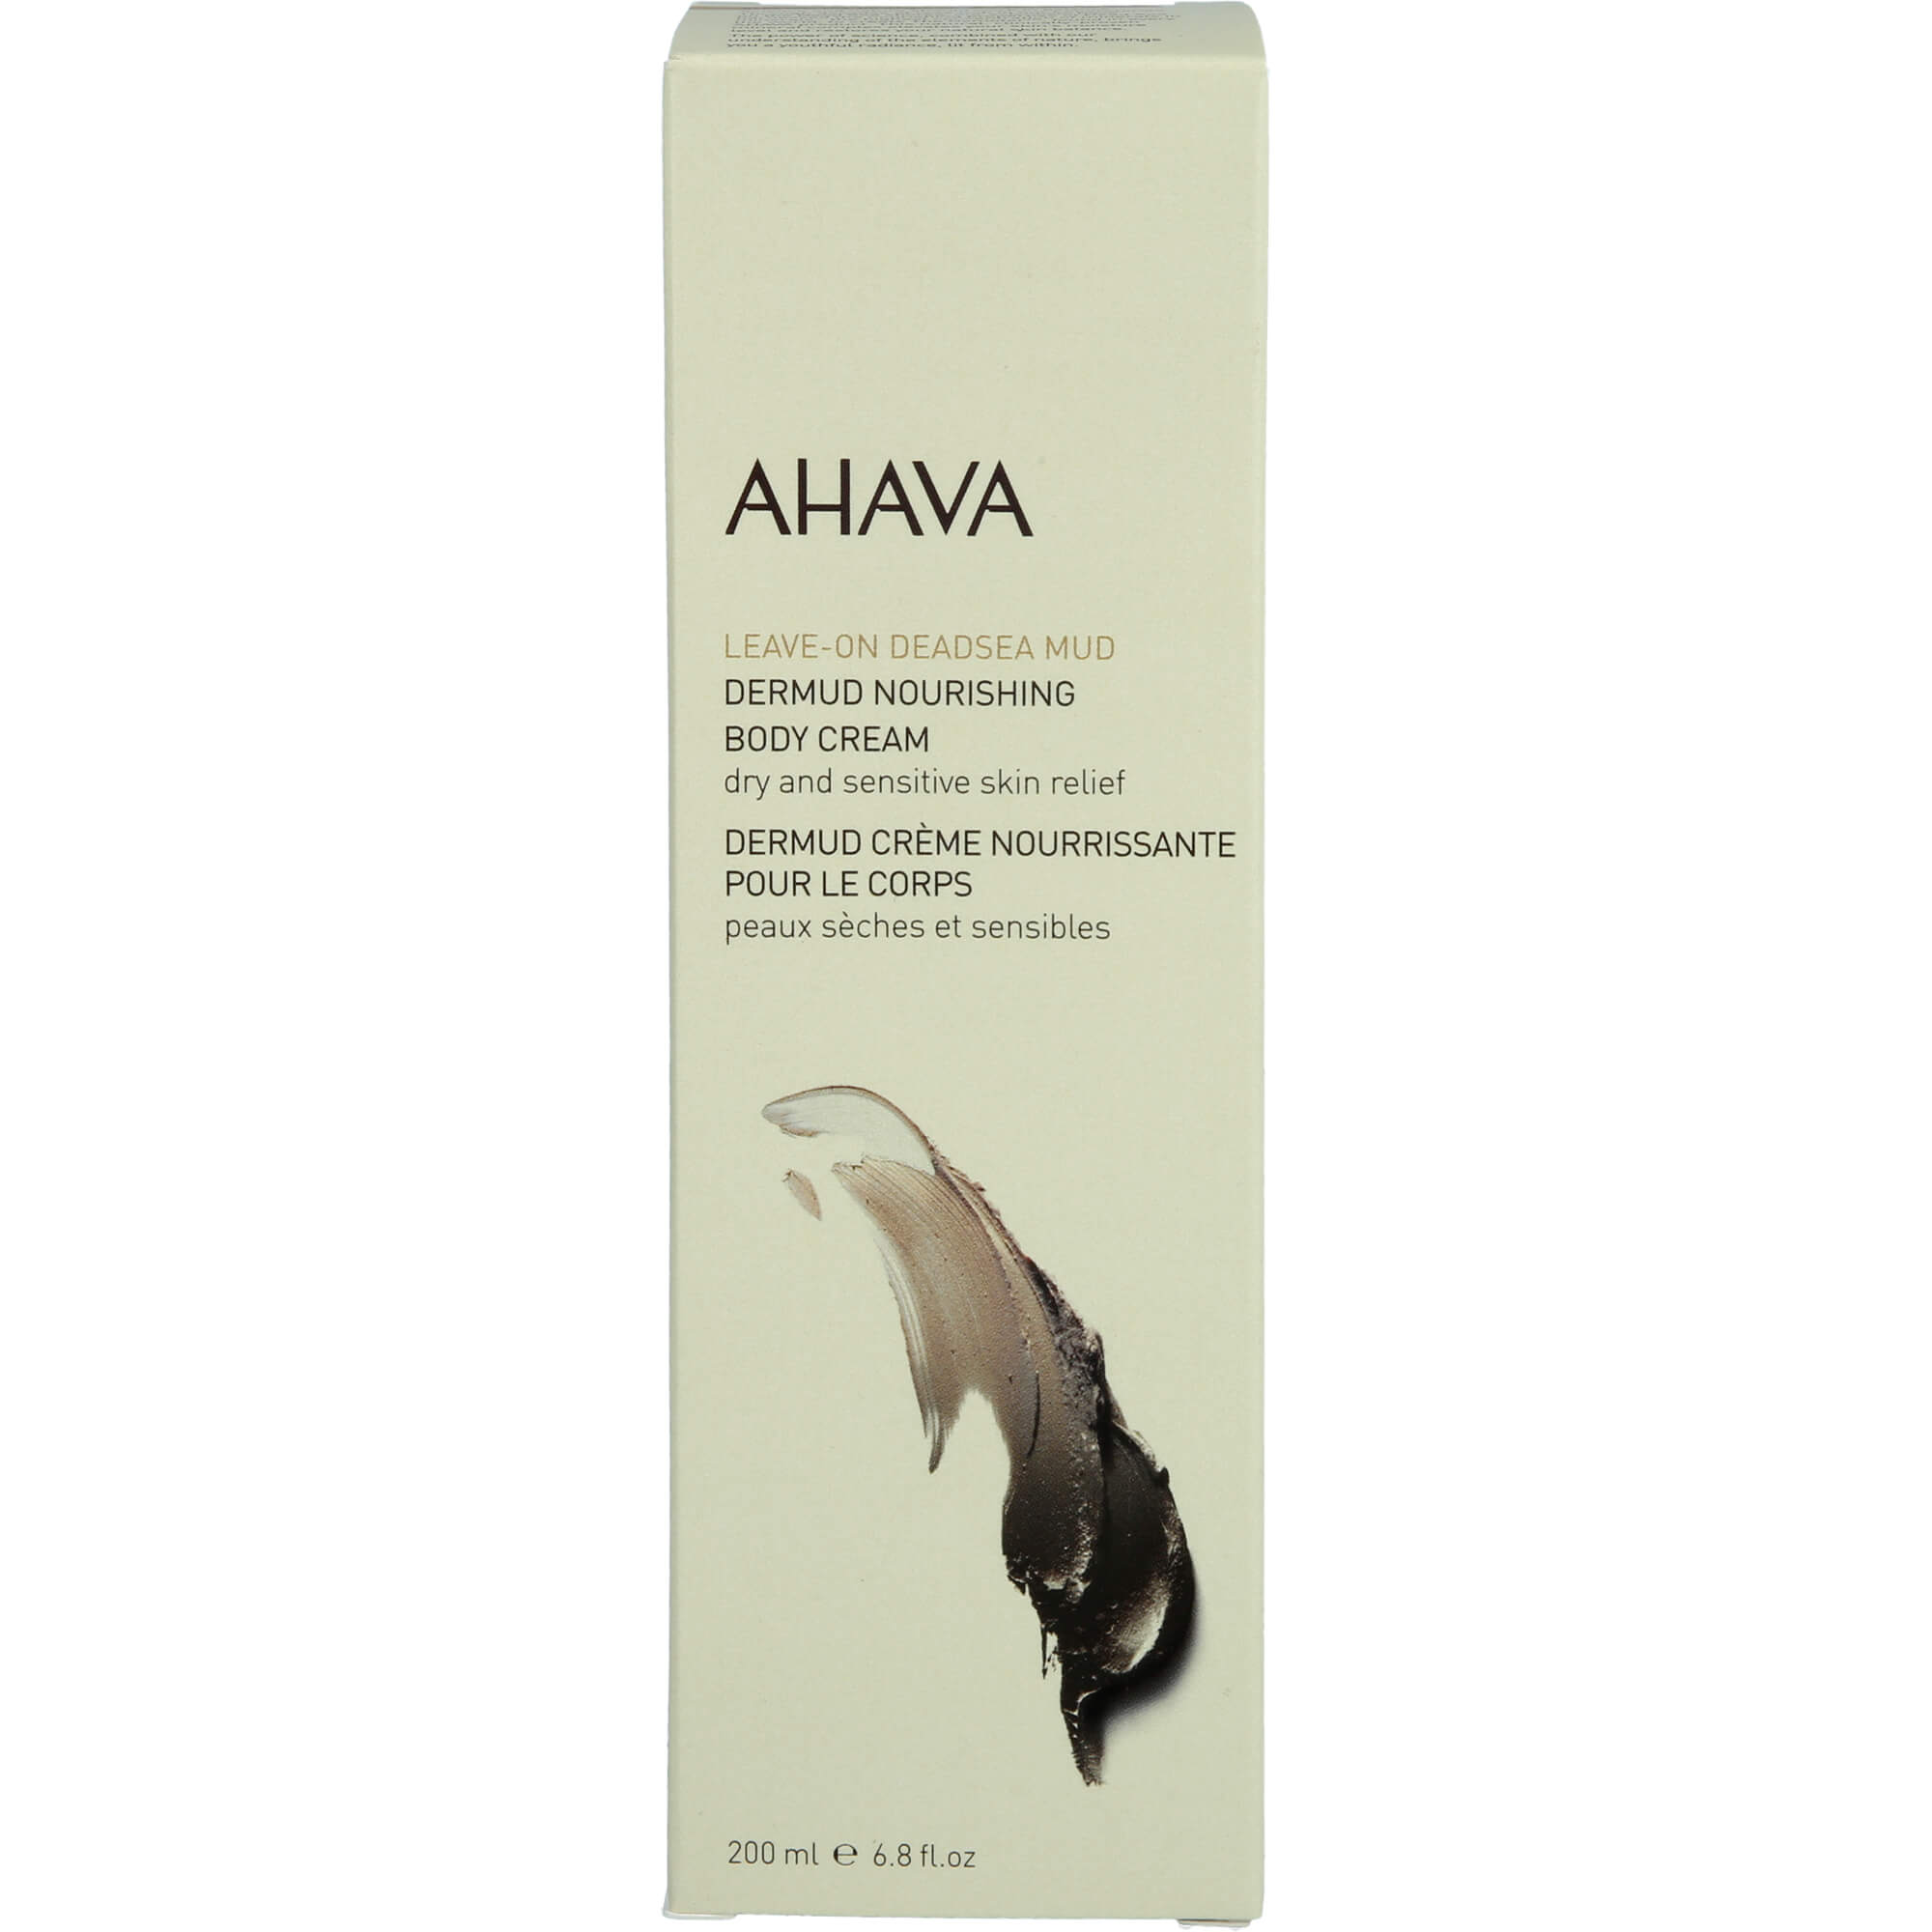 AHAVA Dermud nourishing Body Cream